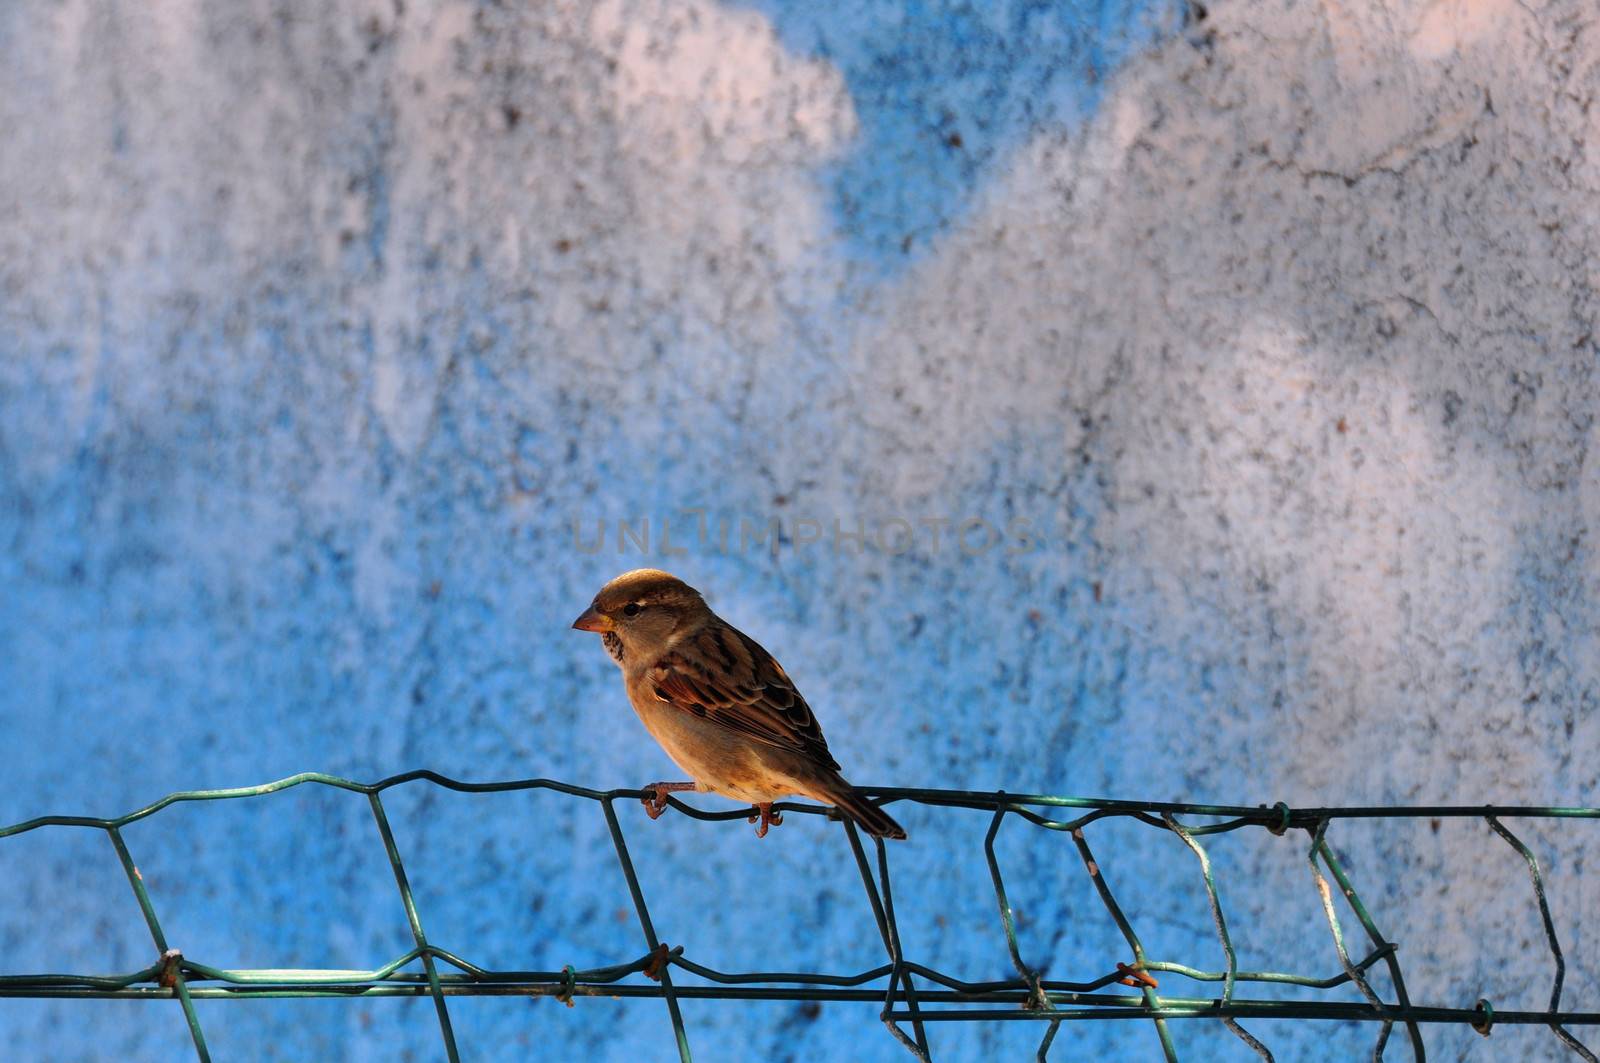 Sparrow small passerine bird sitting on fence. Animal background.